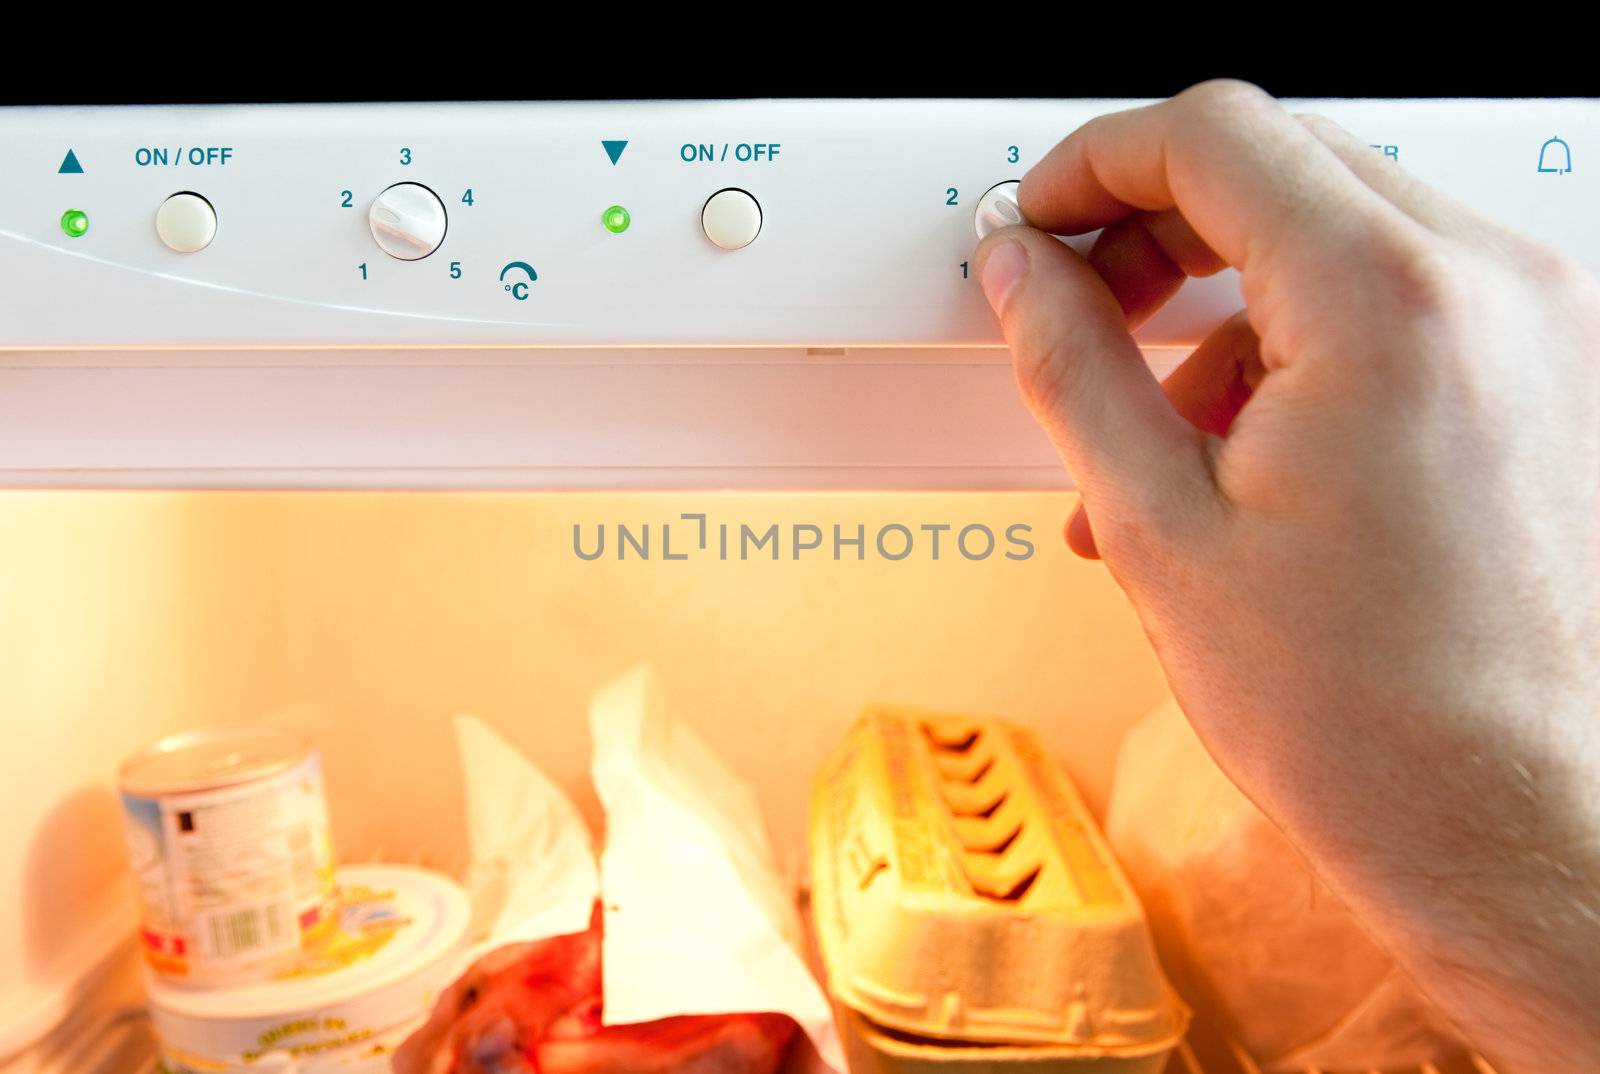 Conceptual image of saving energy and appliance